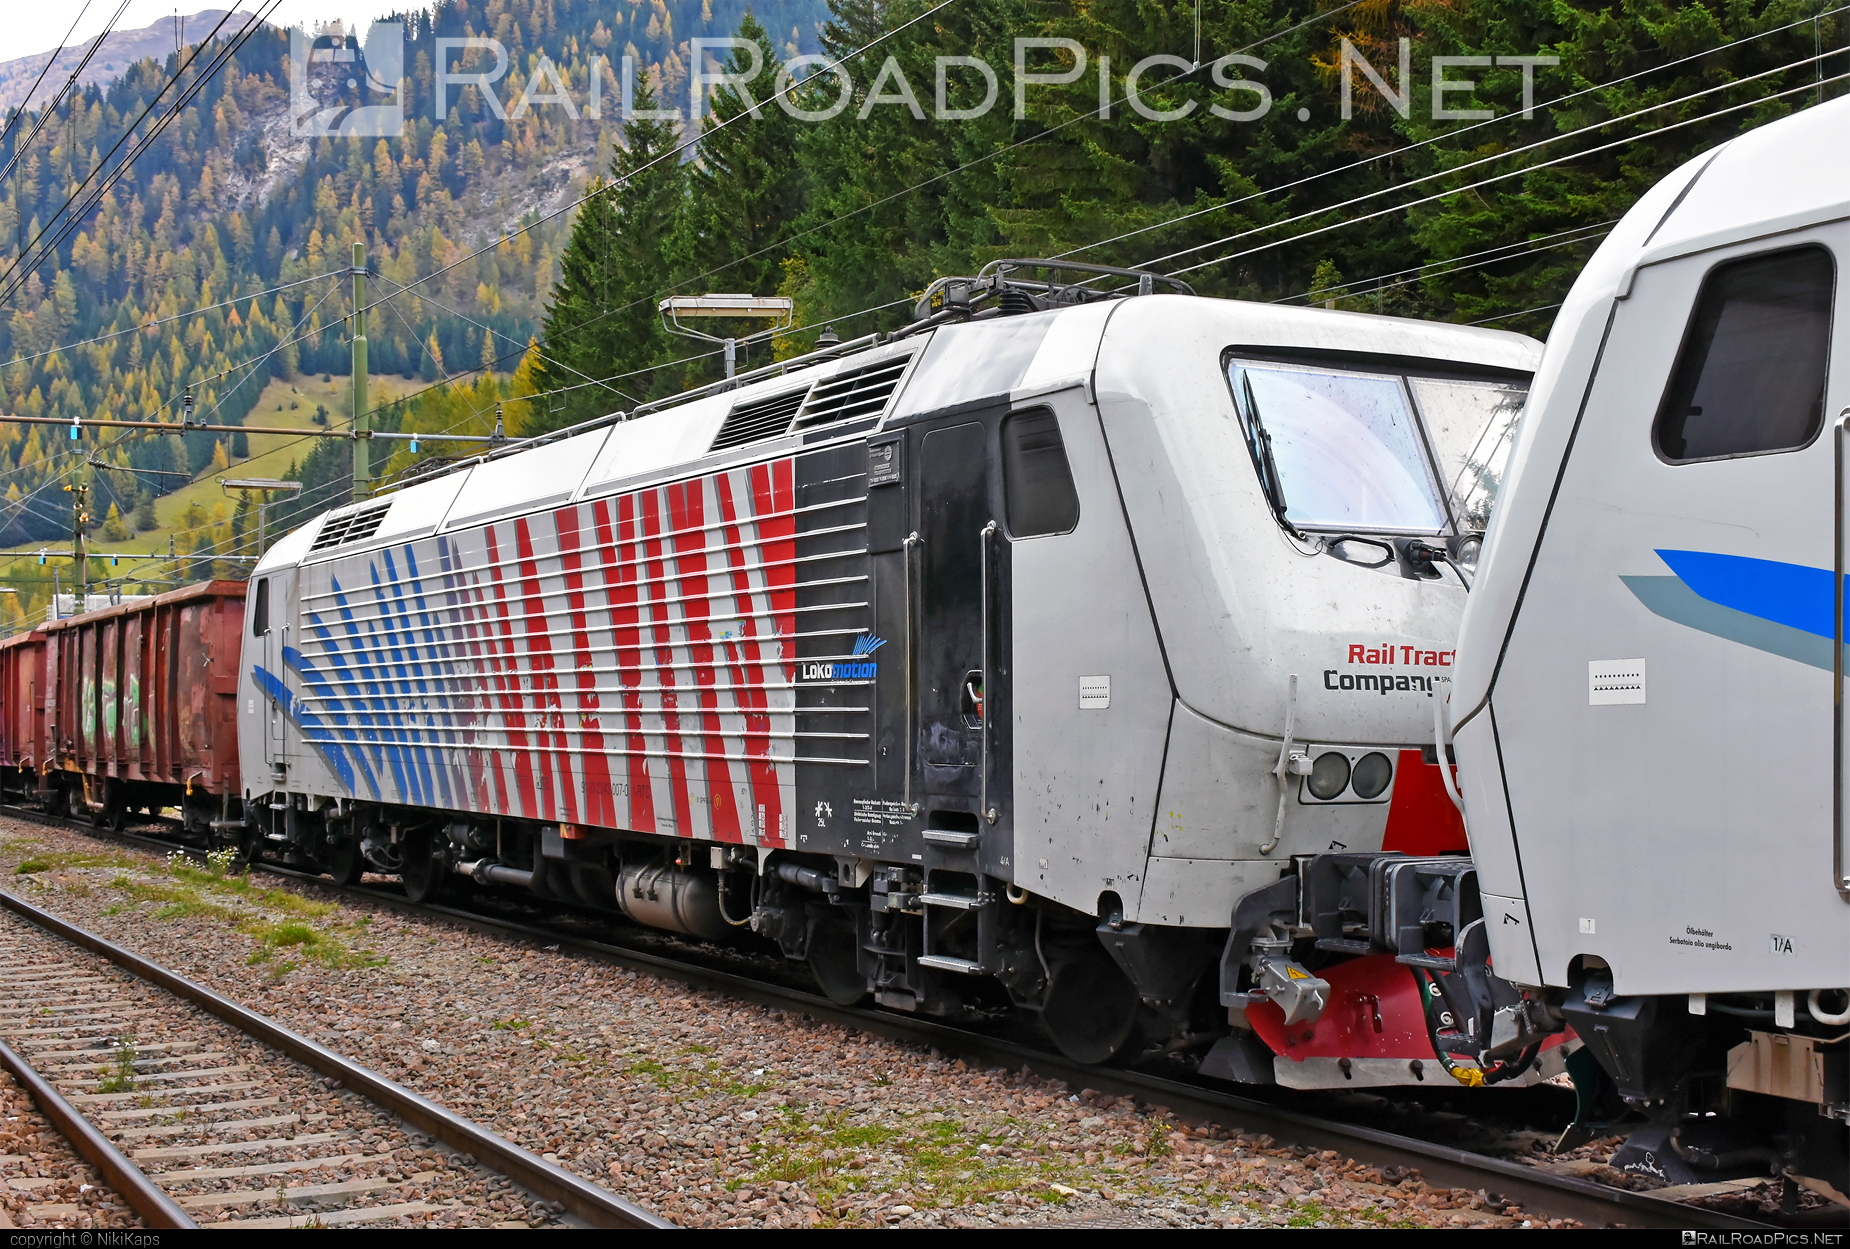 FS Class E.412 - EU43-007 operated by Rail Traction Company #RailTractionCompany #e412 #fsClassE412 #lokomotion #openwagon #rtc